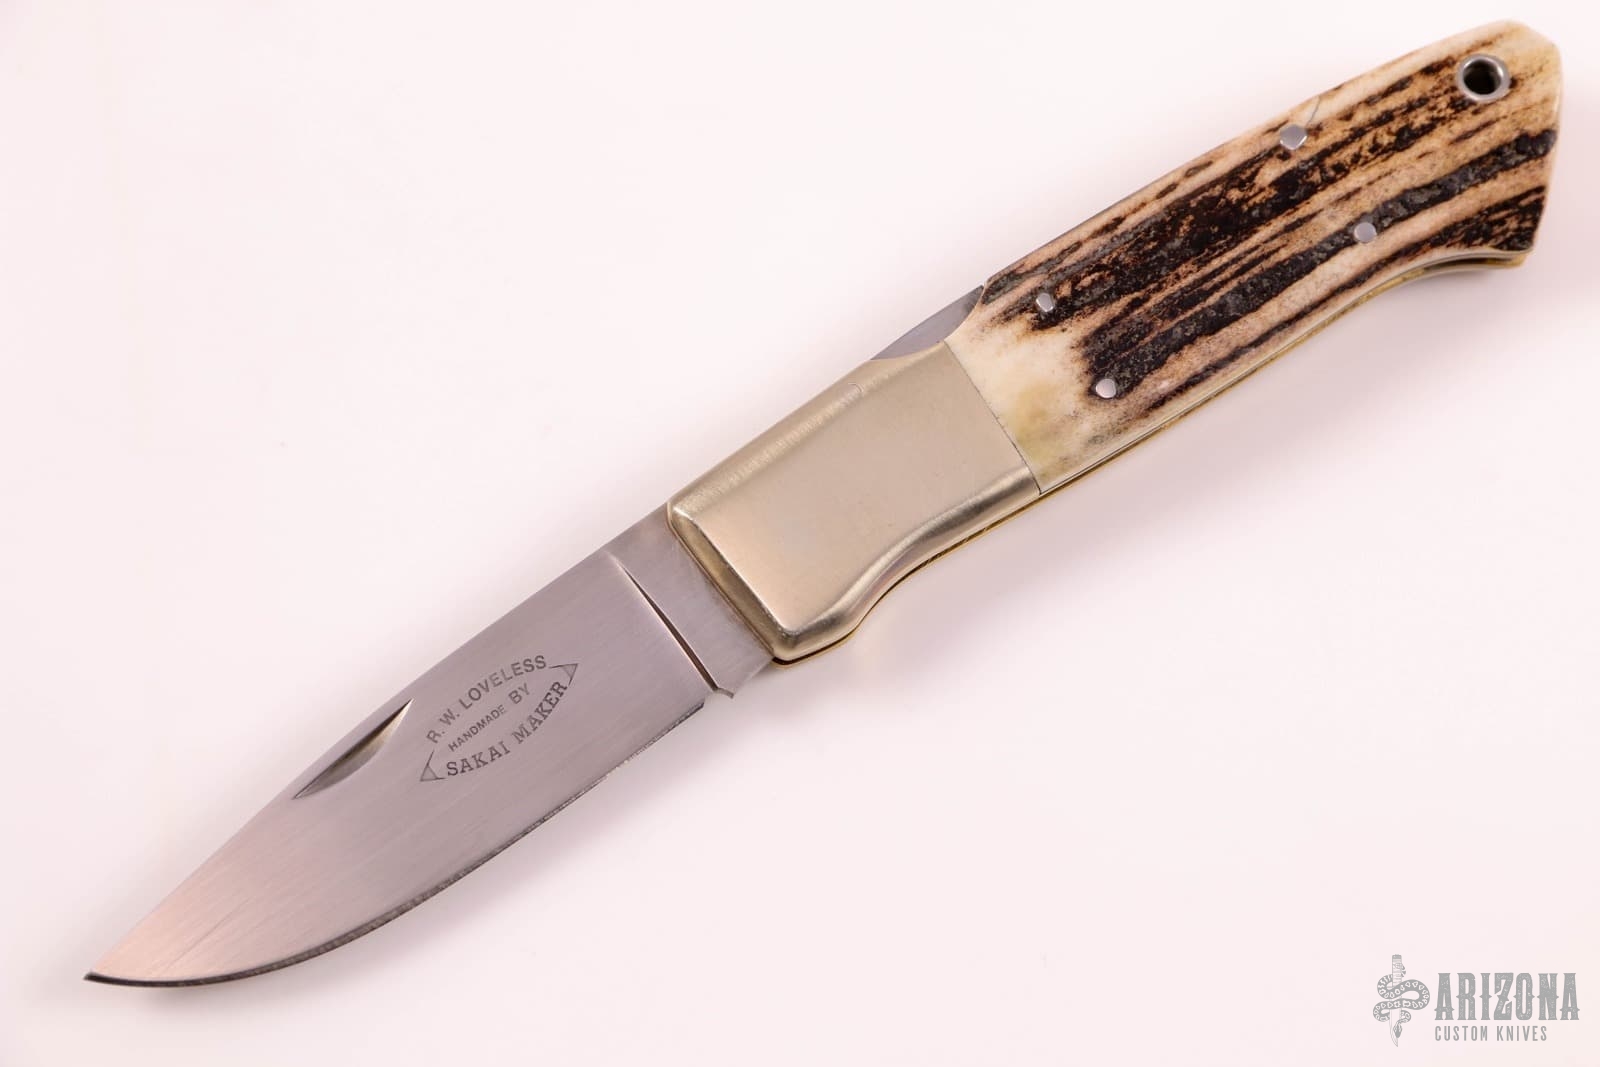 G Sakai/Loveless Midlock Folder | Arizona Custom Knives